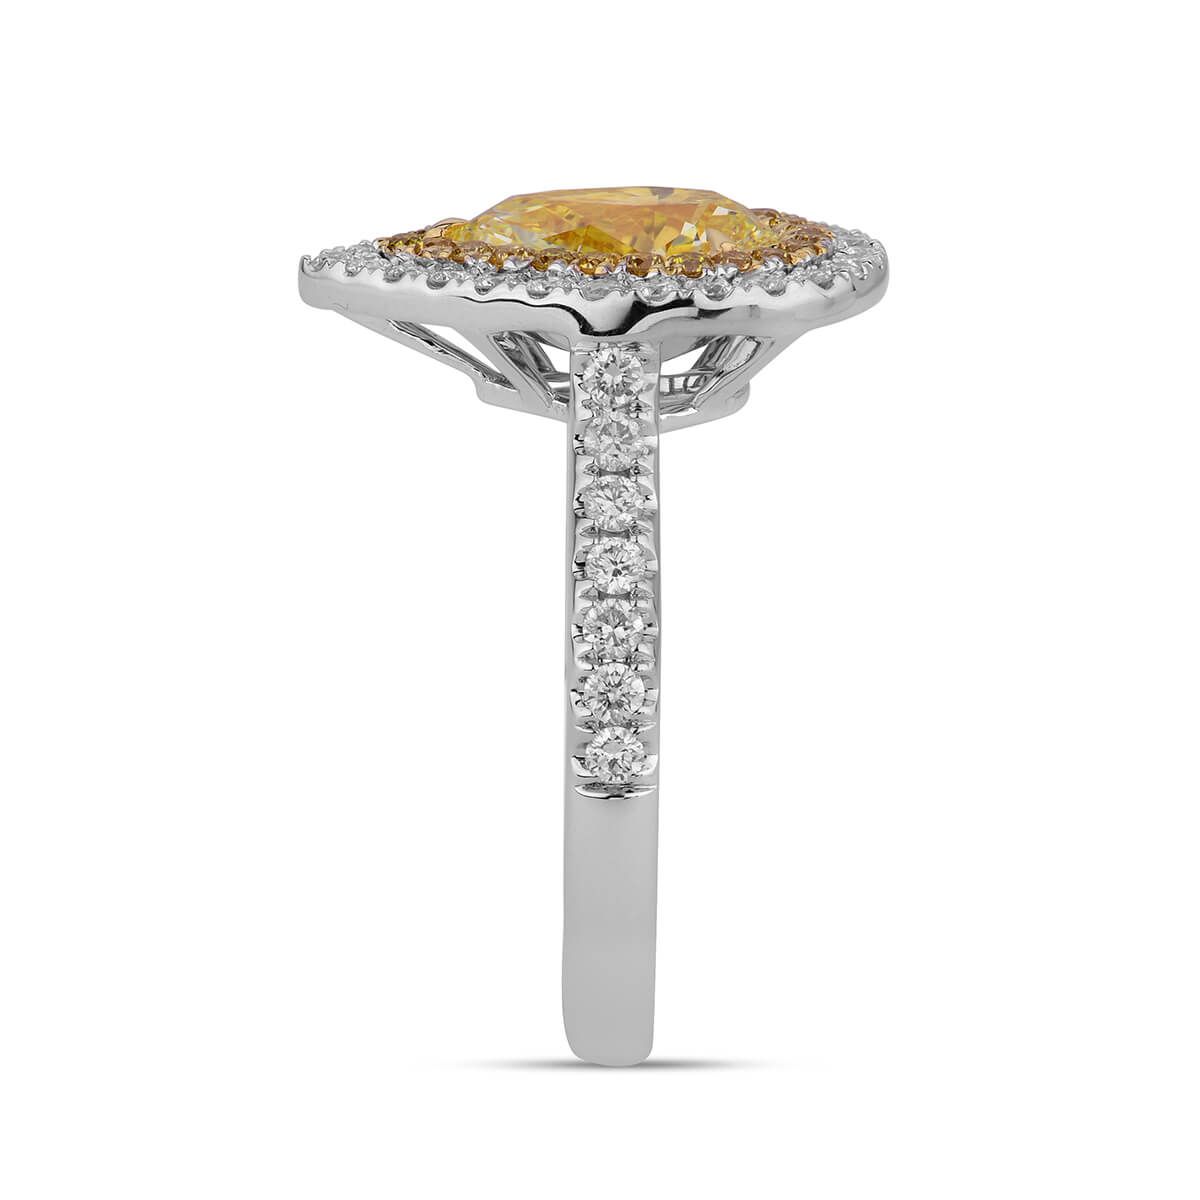 Fancy Light Yellow Diamond Ring, 1.81 Ct. TW, Pear shape, GIA Certified, 5181057928